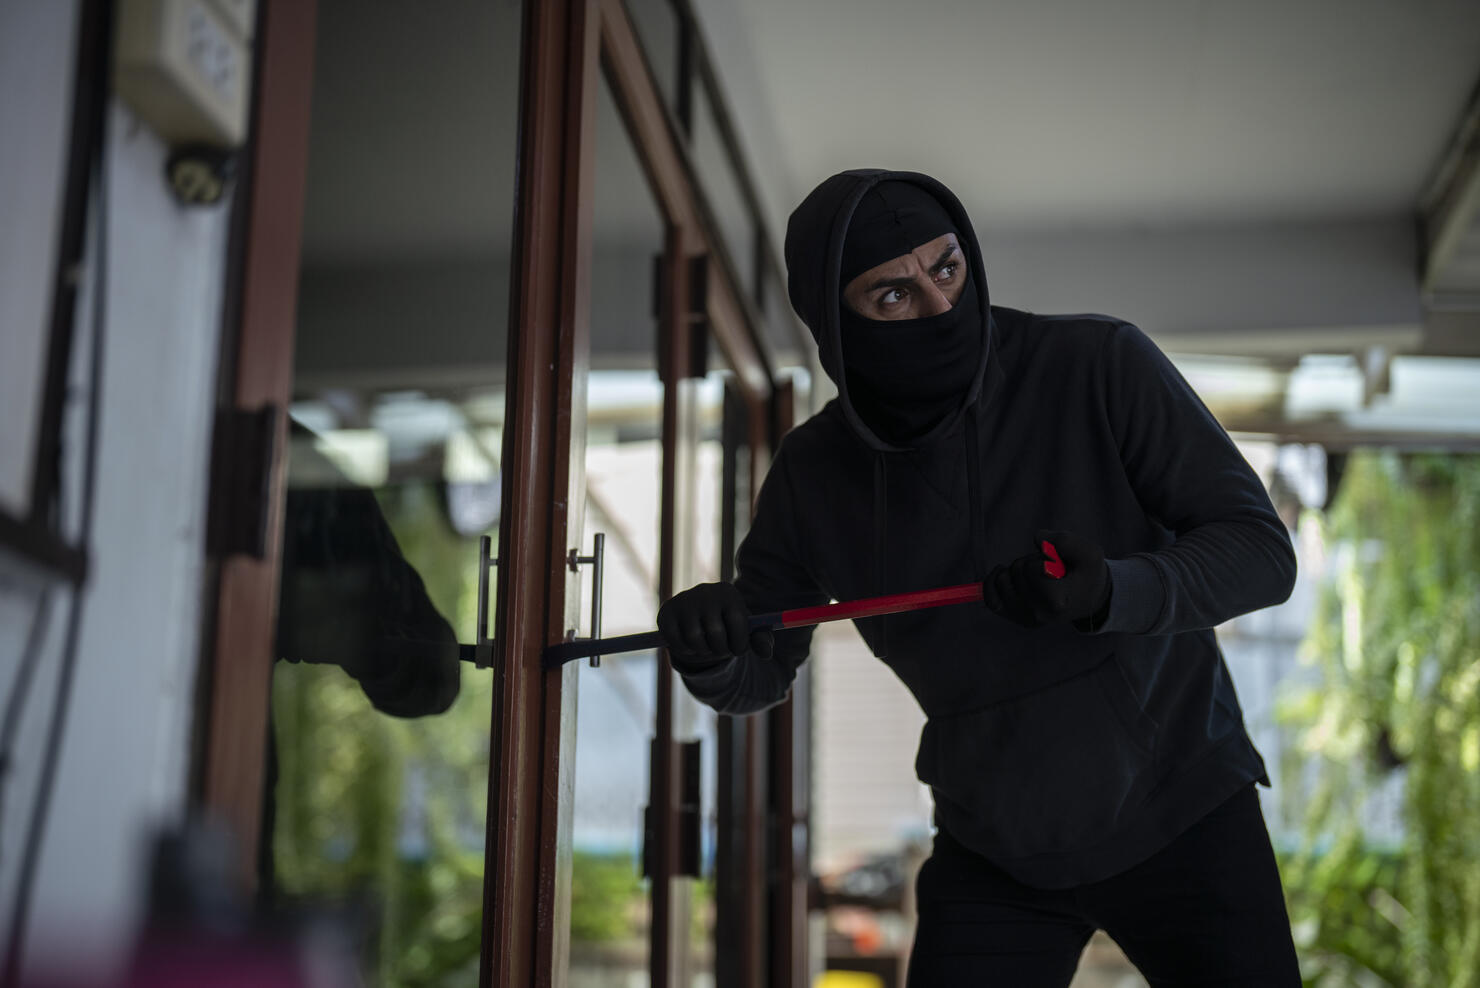 Robber breaking in house